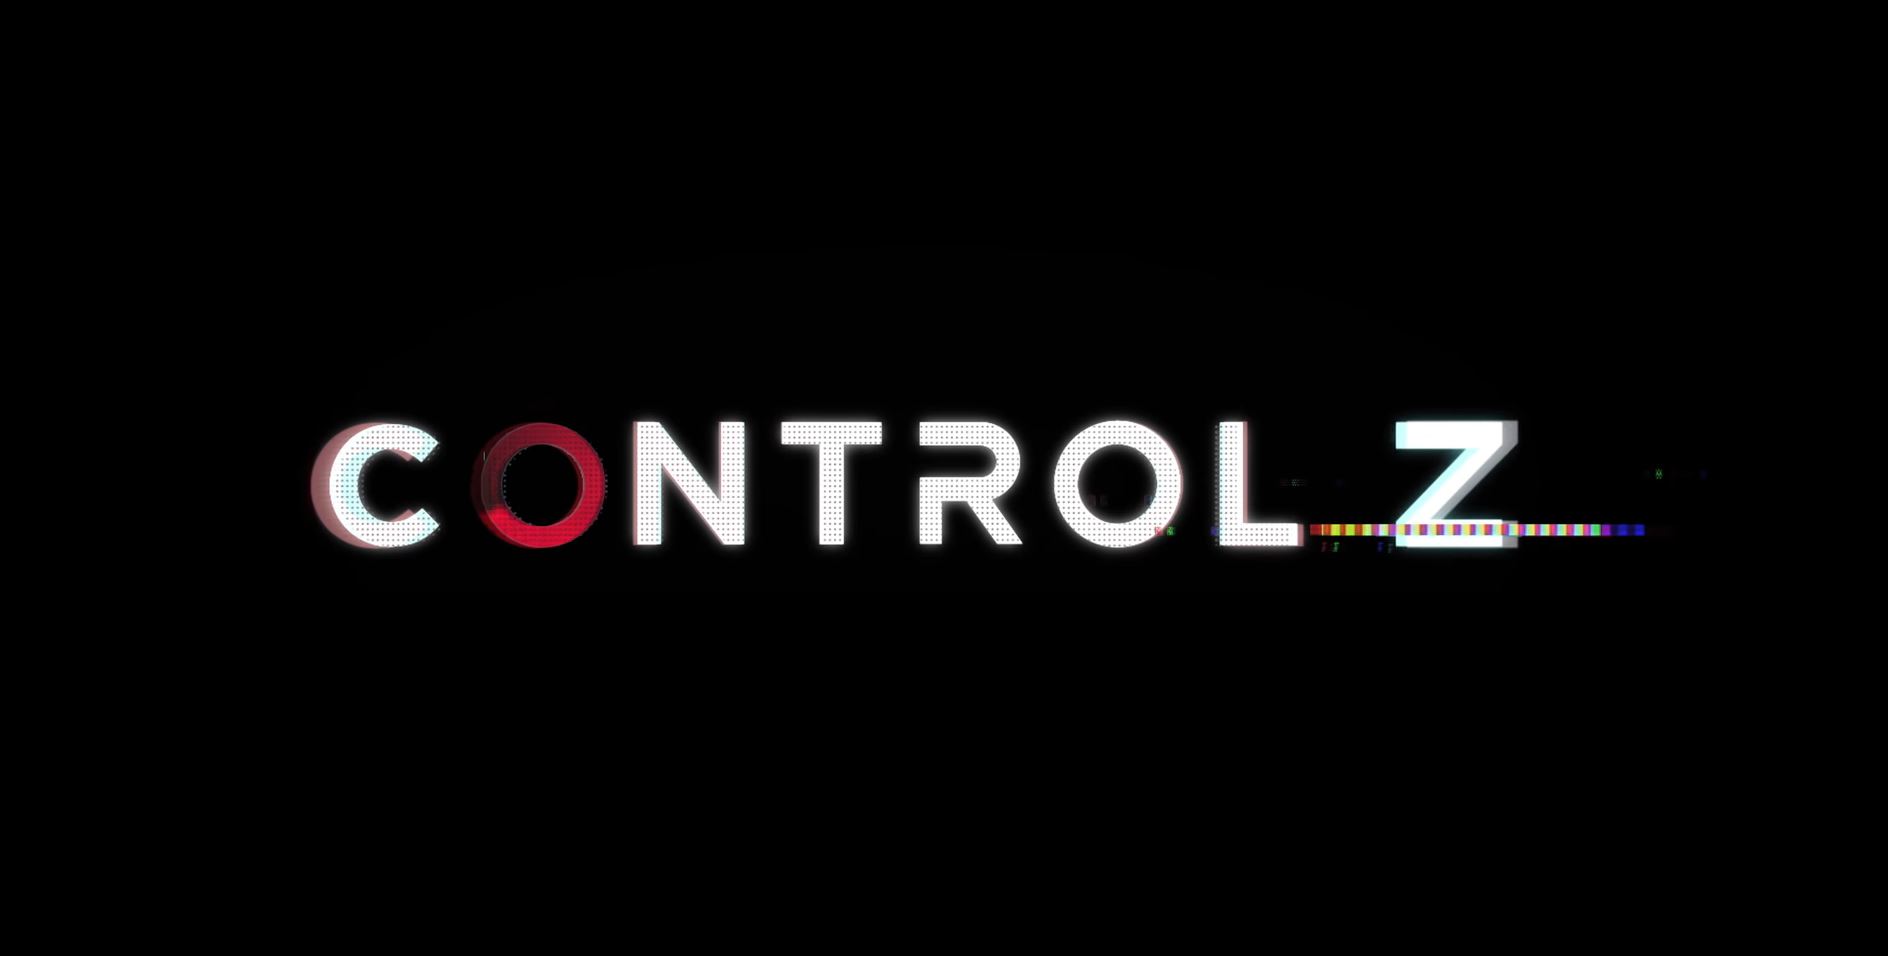 Control Z una nuova serie TV in streaming su Netflix